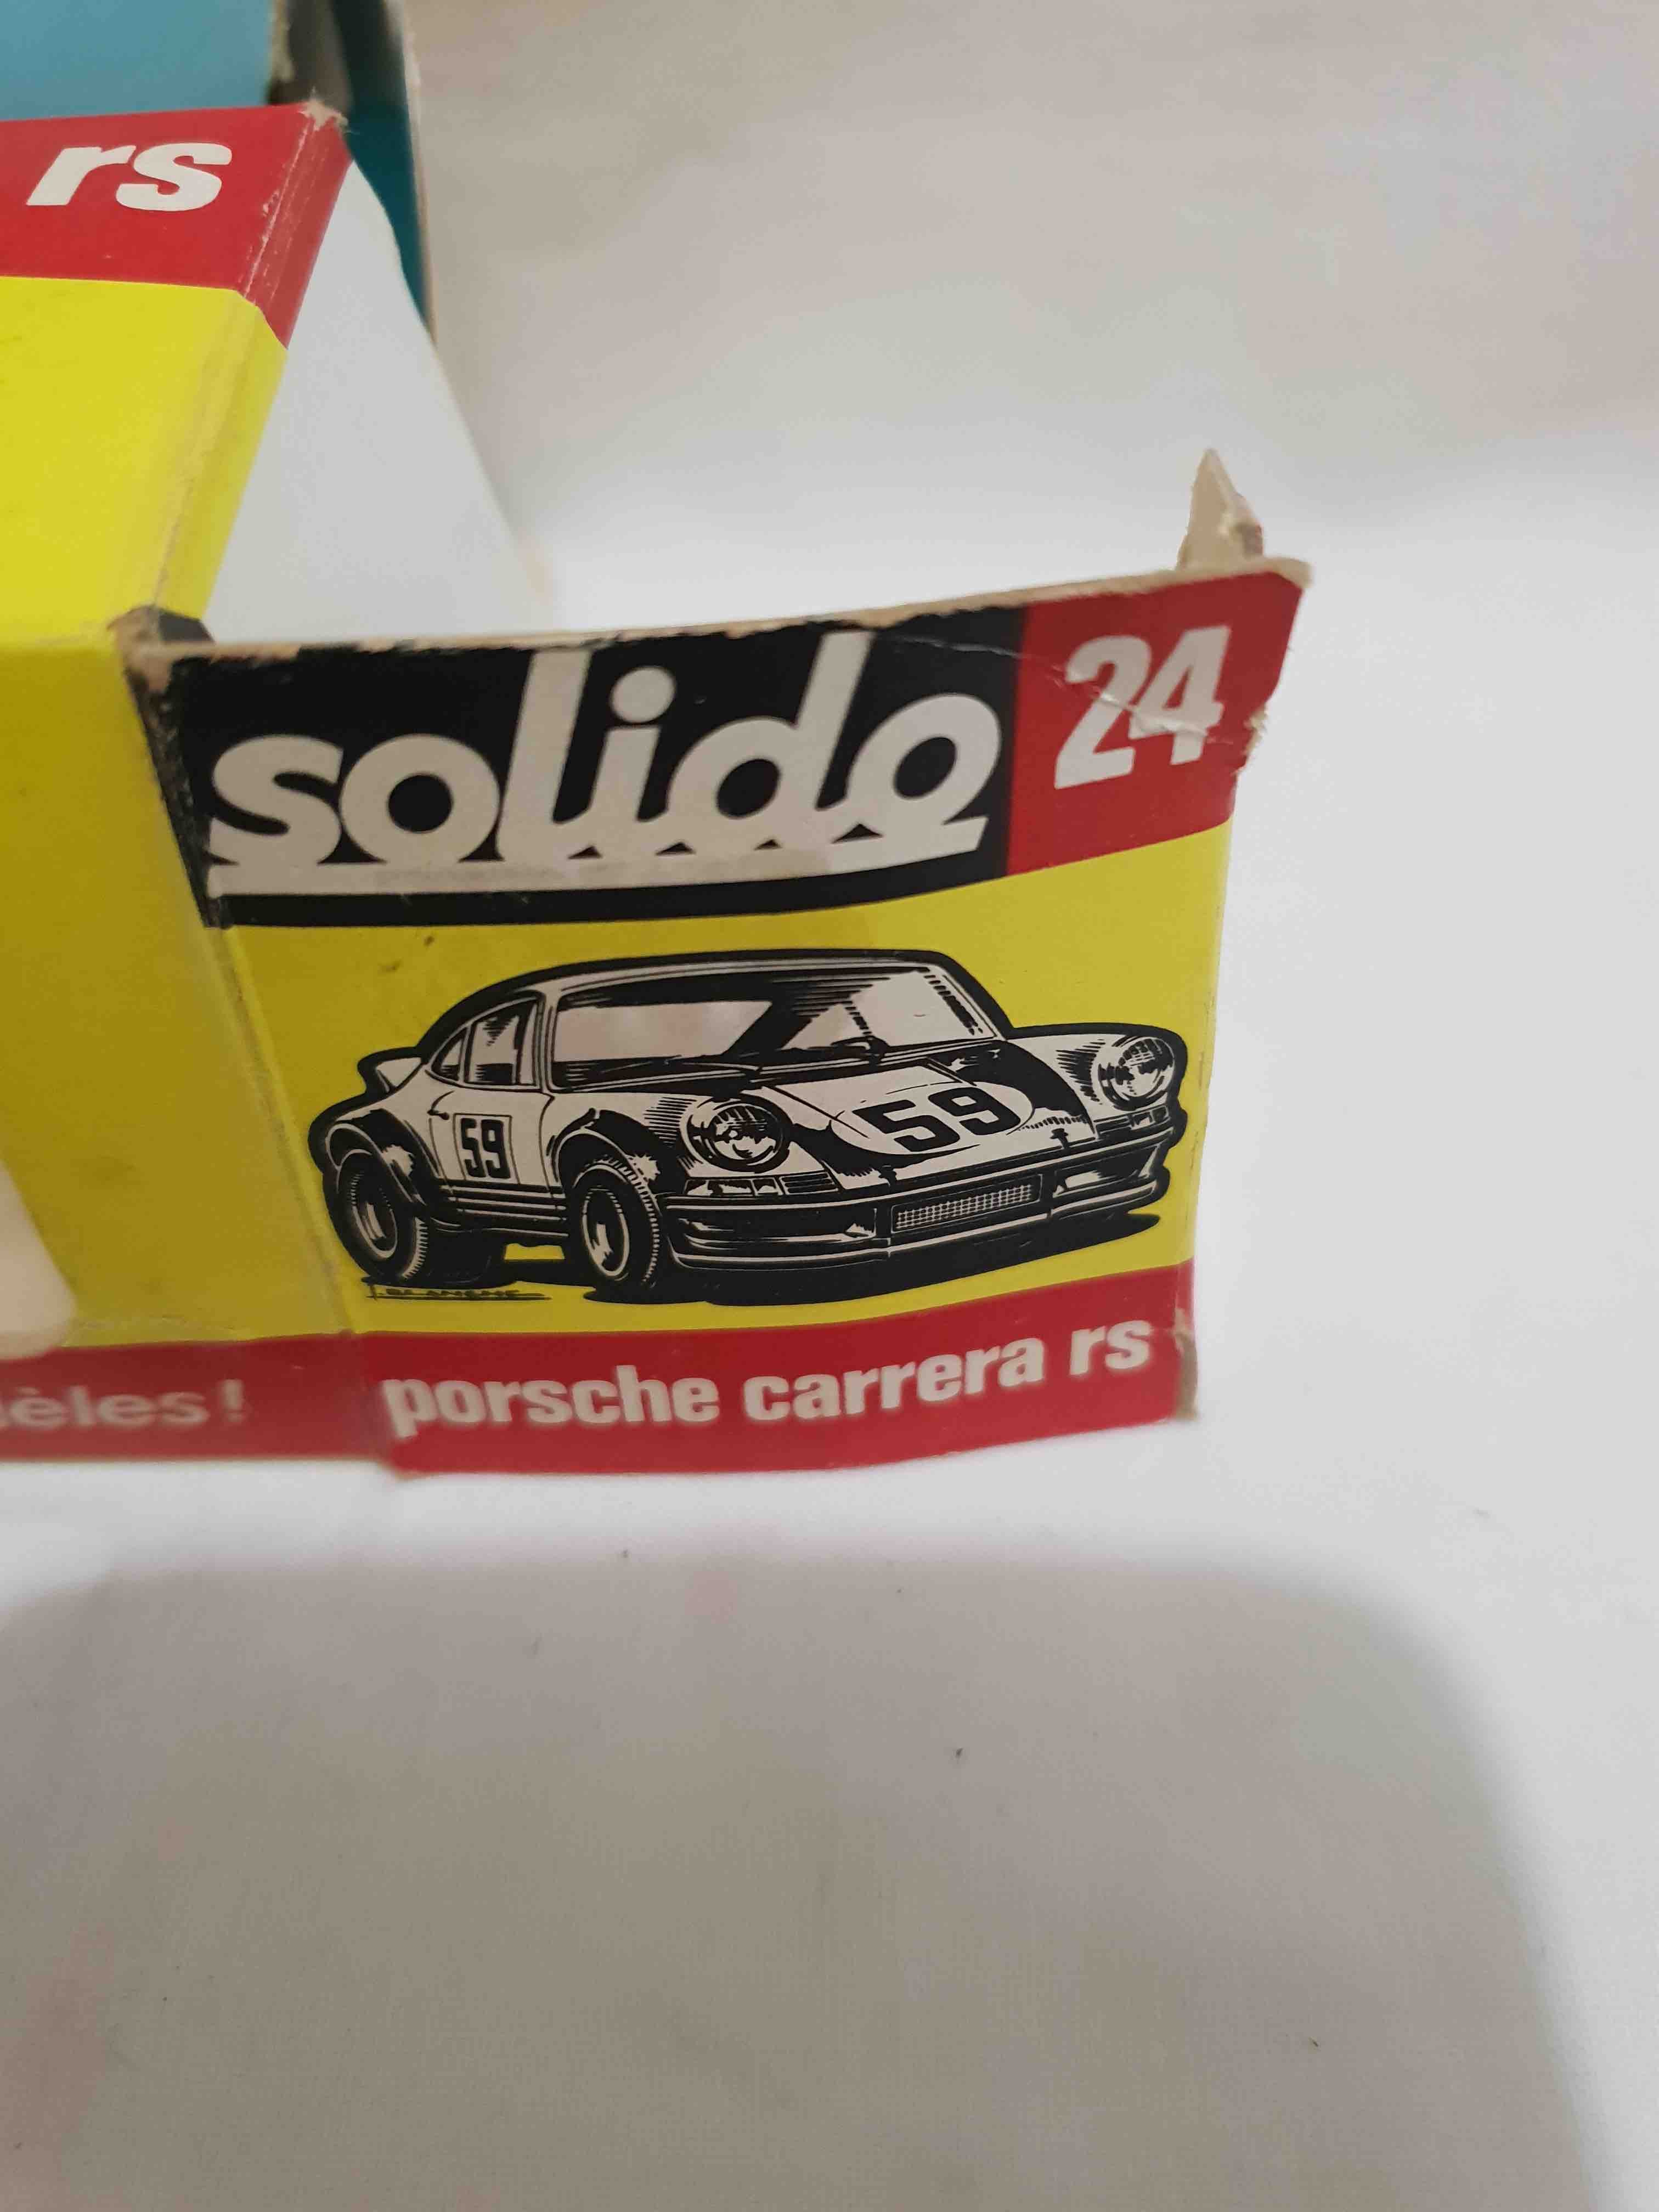 PORSCHE CARRERA RS 24 SOLIDO